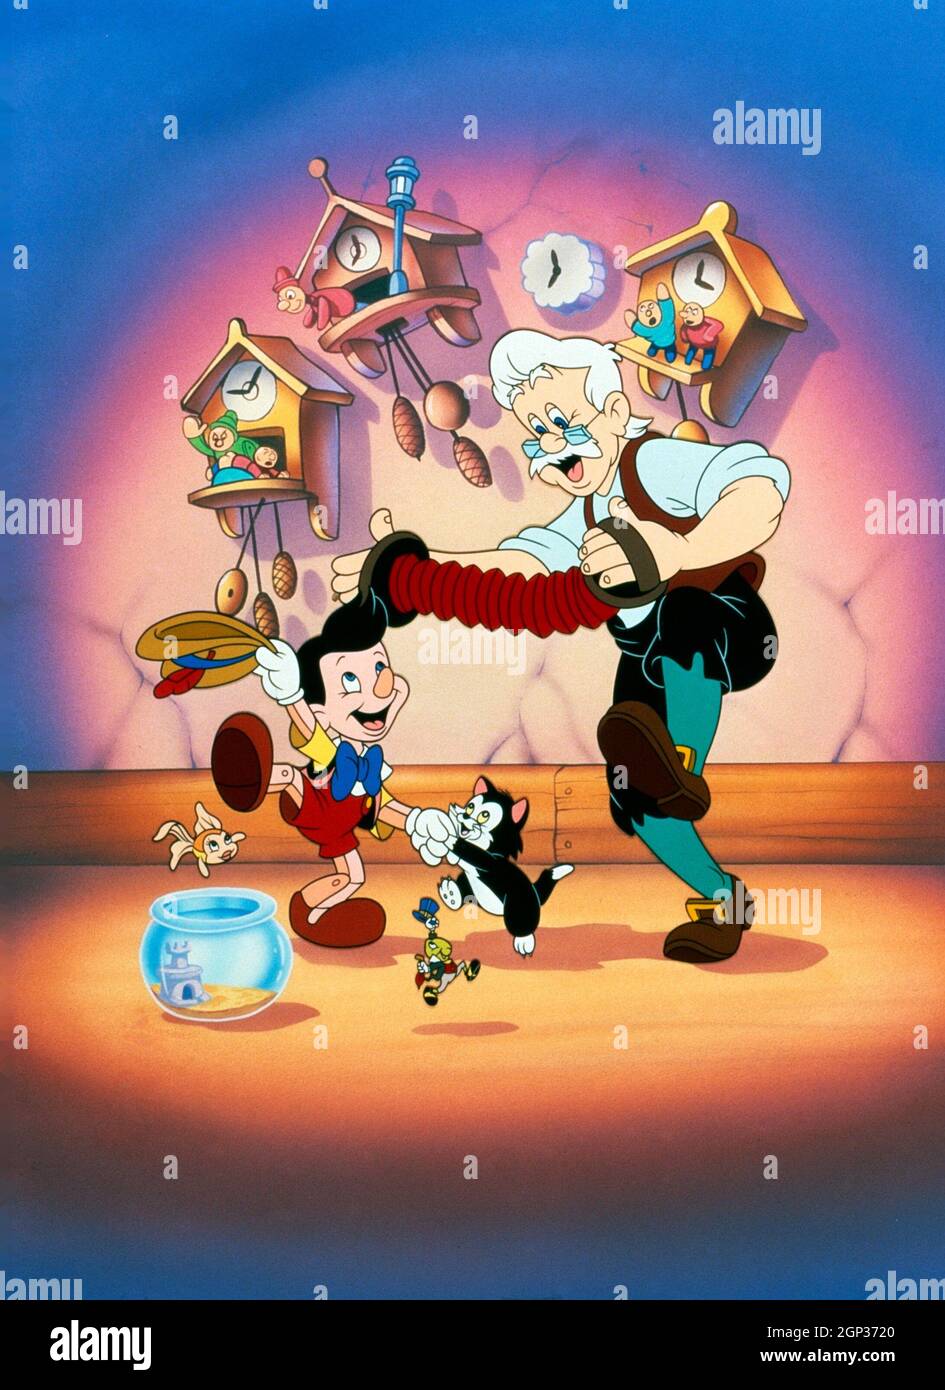 PINOCCHIO, da sinistra: Cleo, Pinocchio, Figaro, Jiminy Cricket, Geppetto,  1940. ©Walt Disney Co./courtesy Everett Collection Foto stock - Alamy